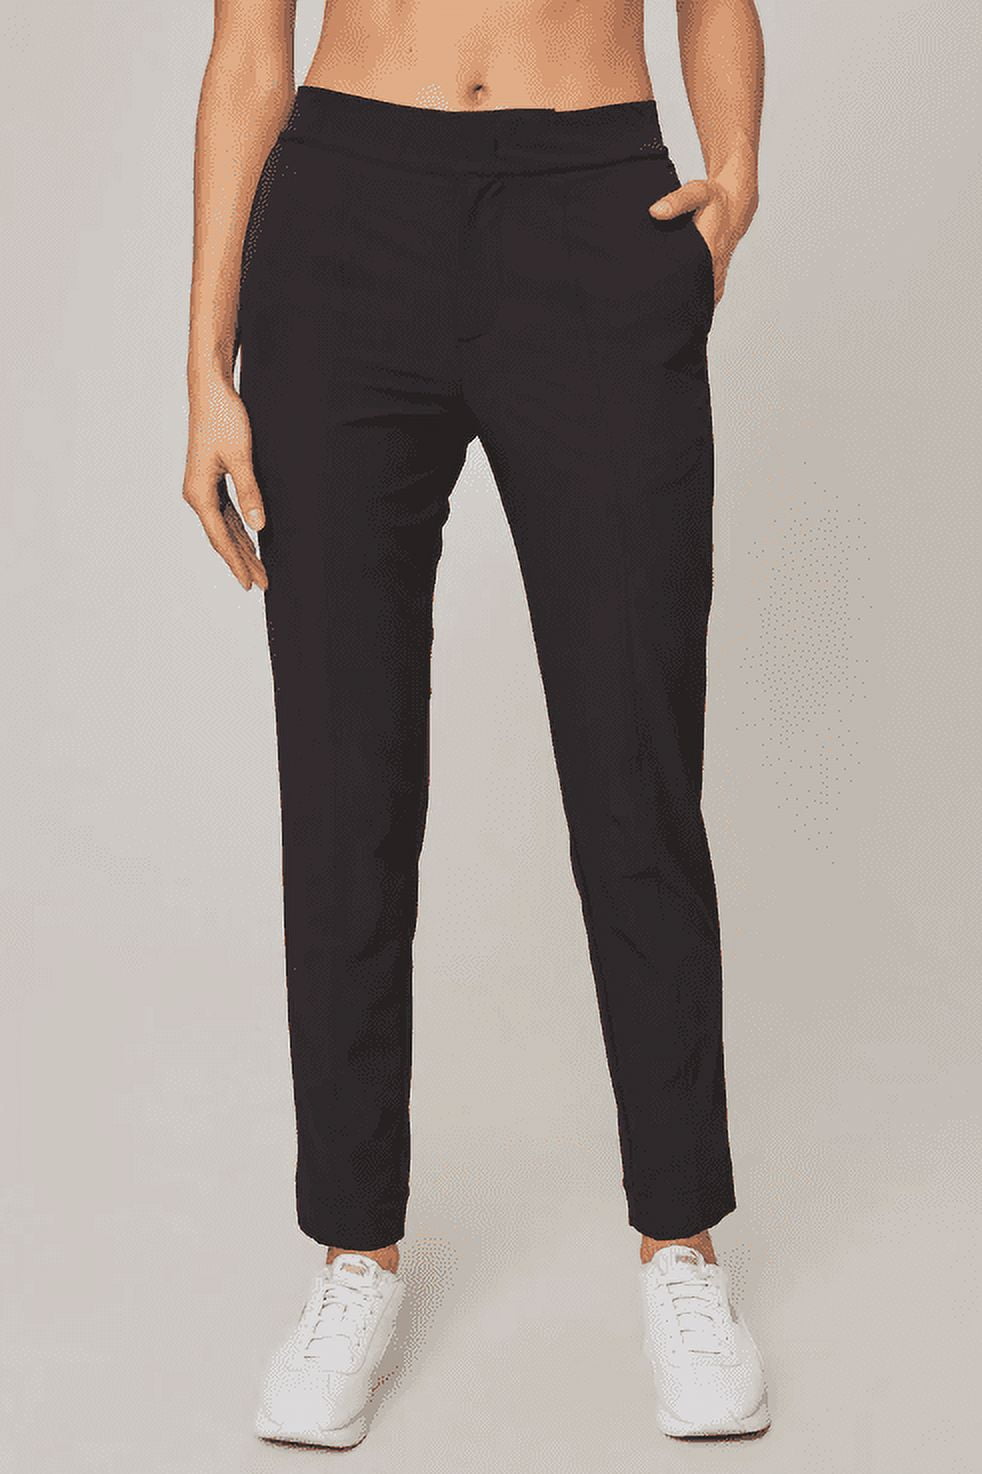 Mondetta Women's Lined Tailored Pant Black 10 